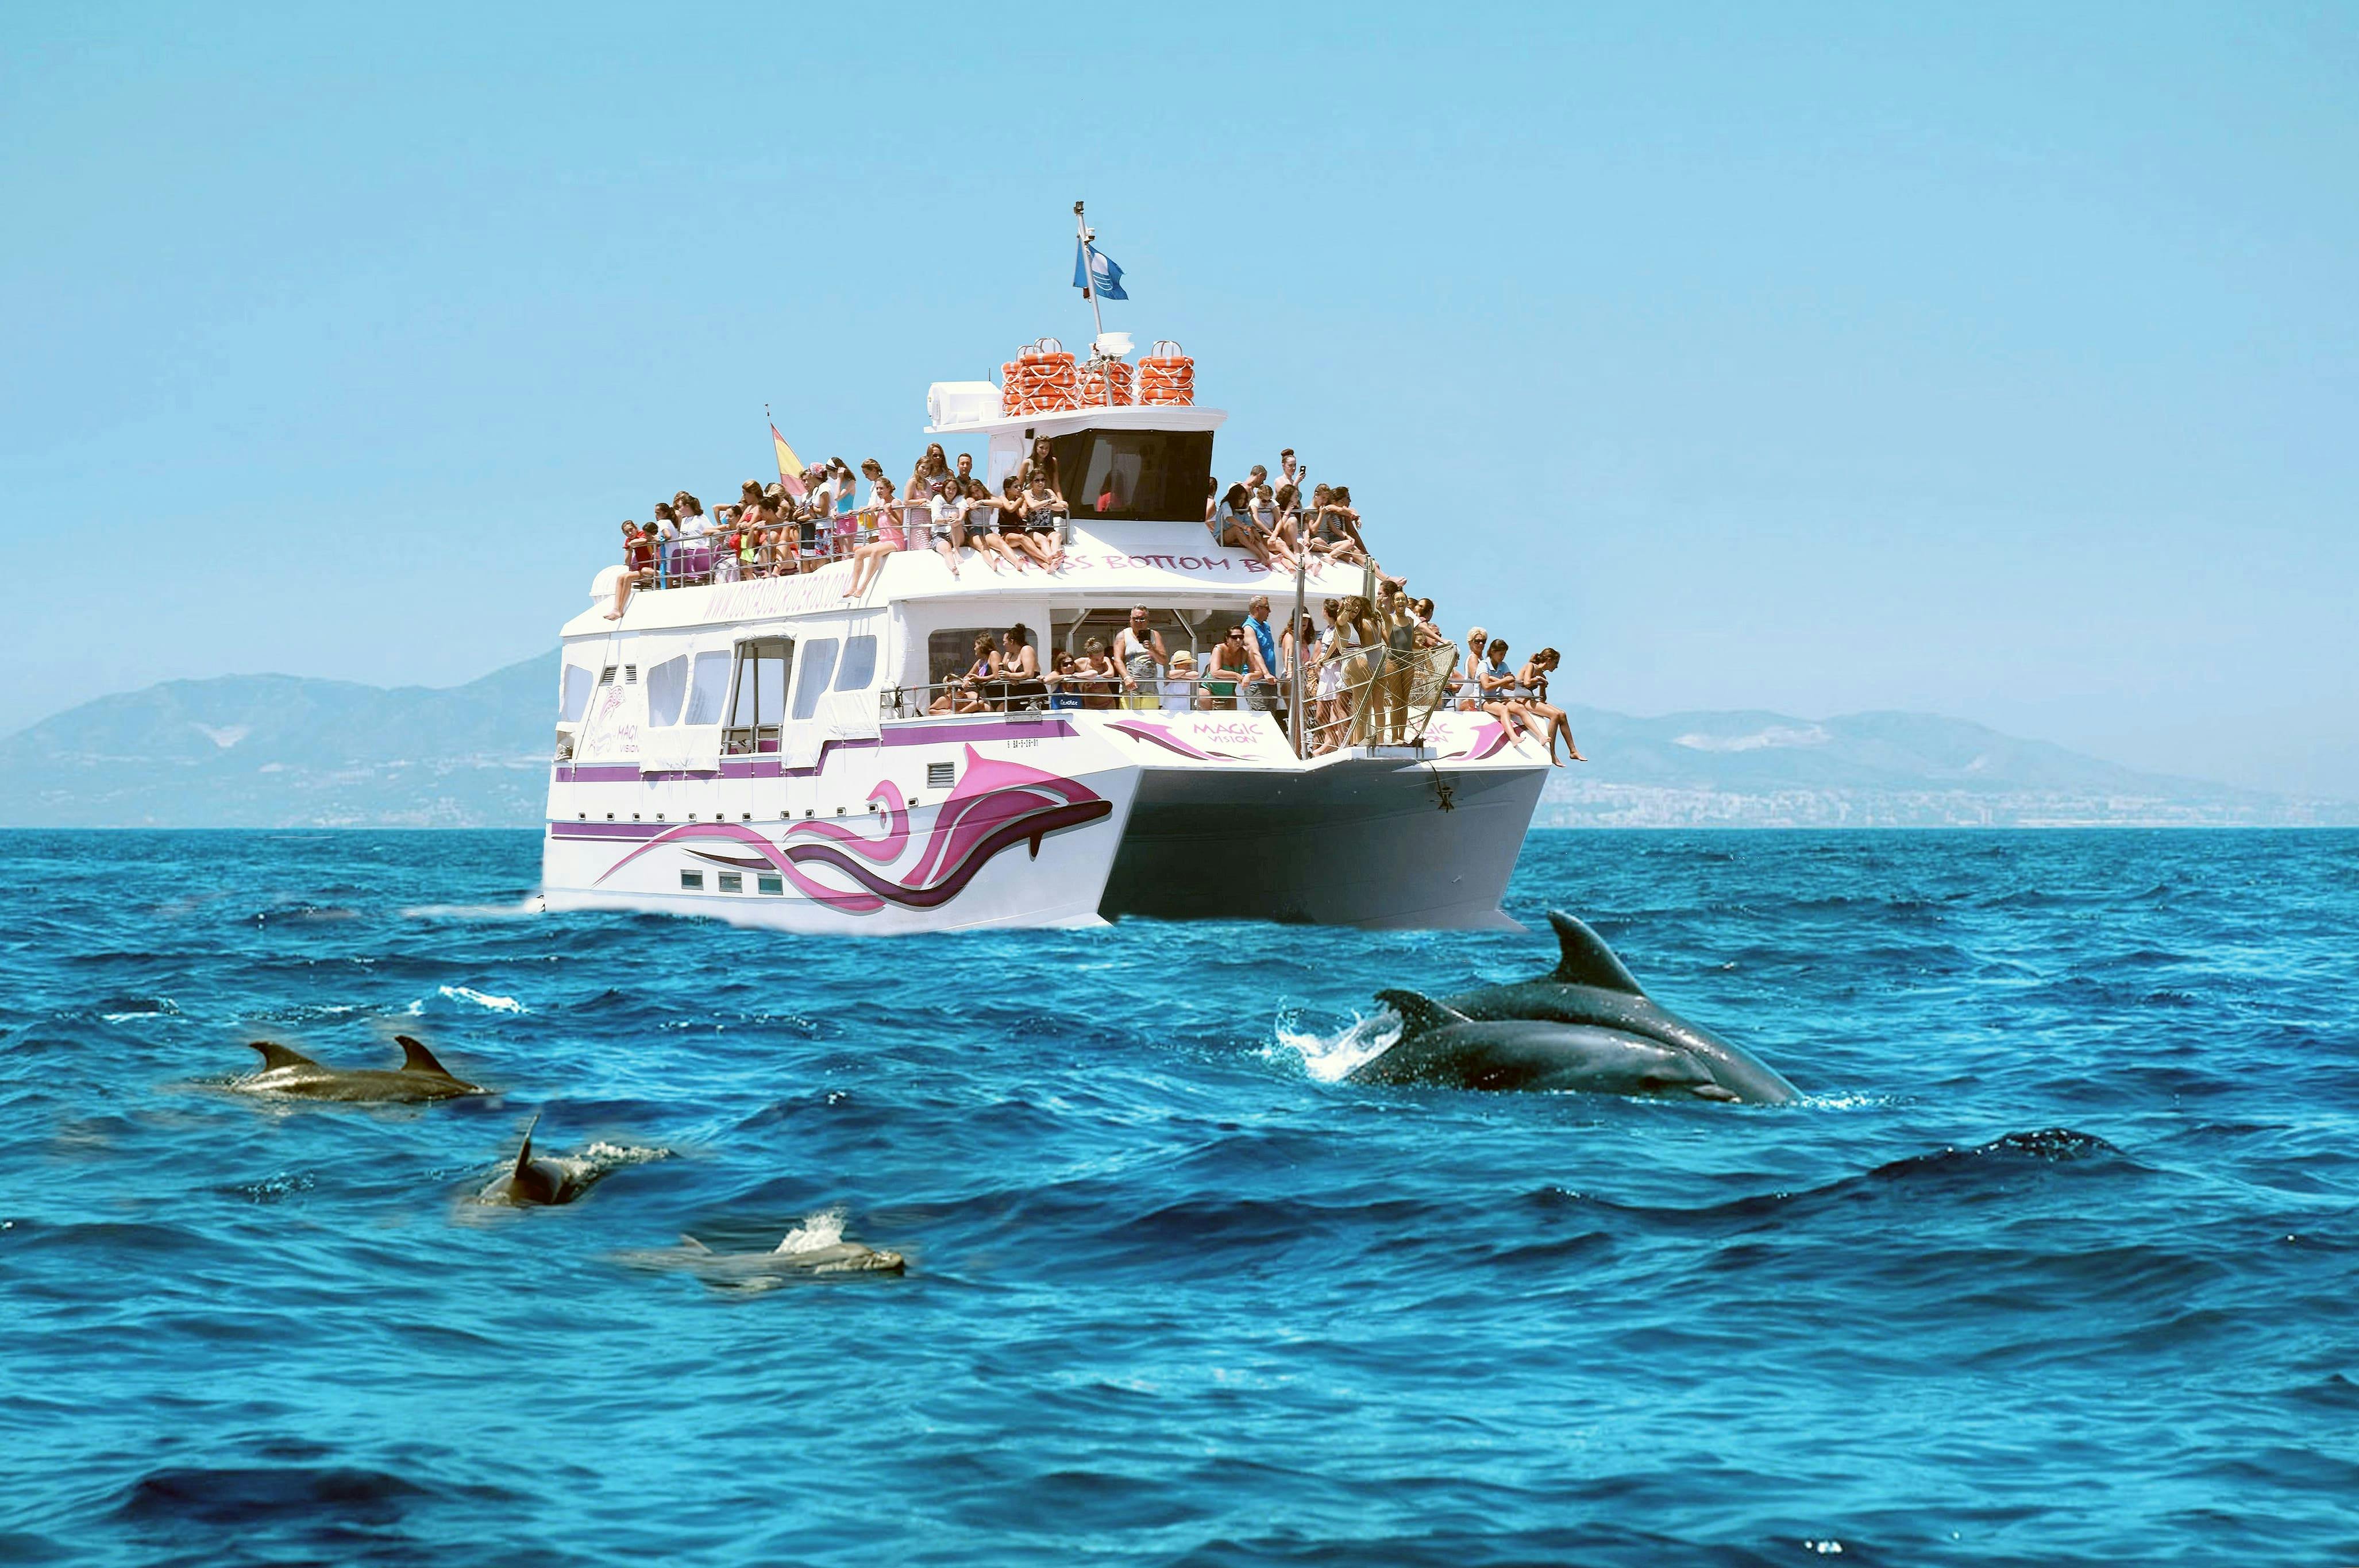 Costasol Cruceros Dolphin Watching Boat Trip